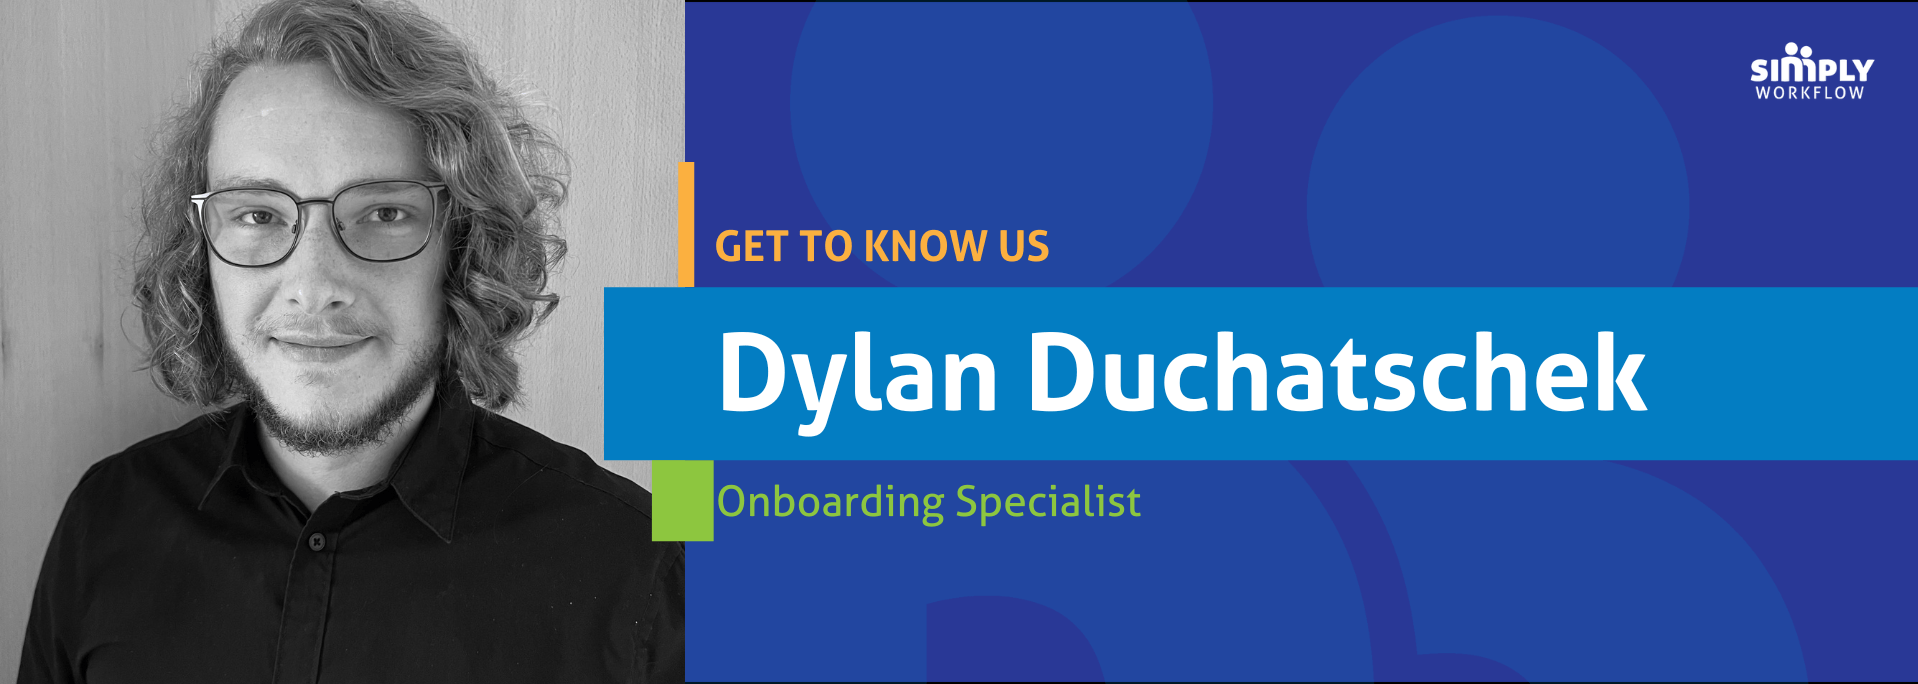 Dylan Duchatschek- Simply Workflow Get to Know Us